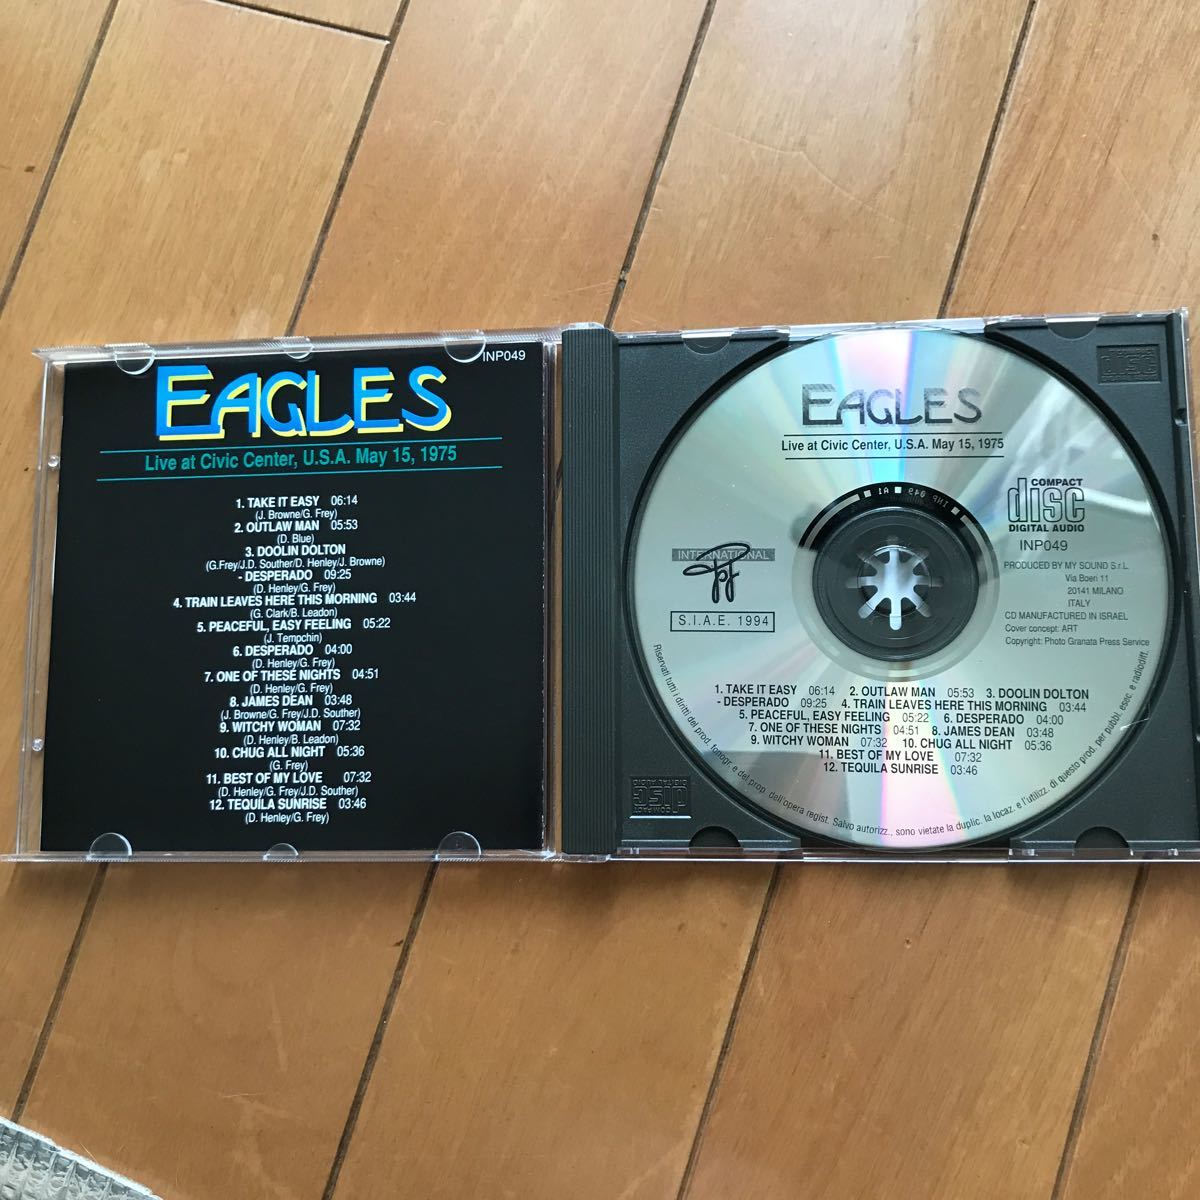 EAGLES Live at Civic Center.U.S.A.May 15